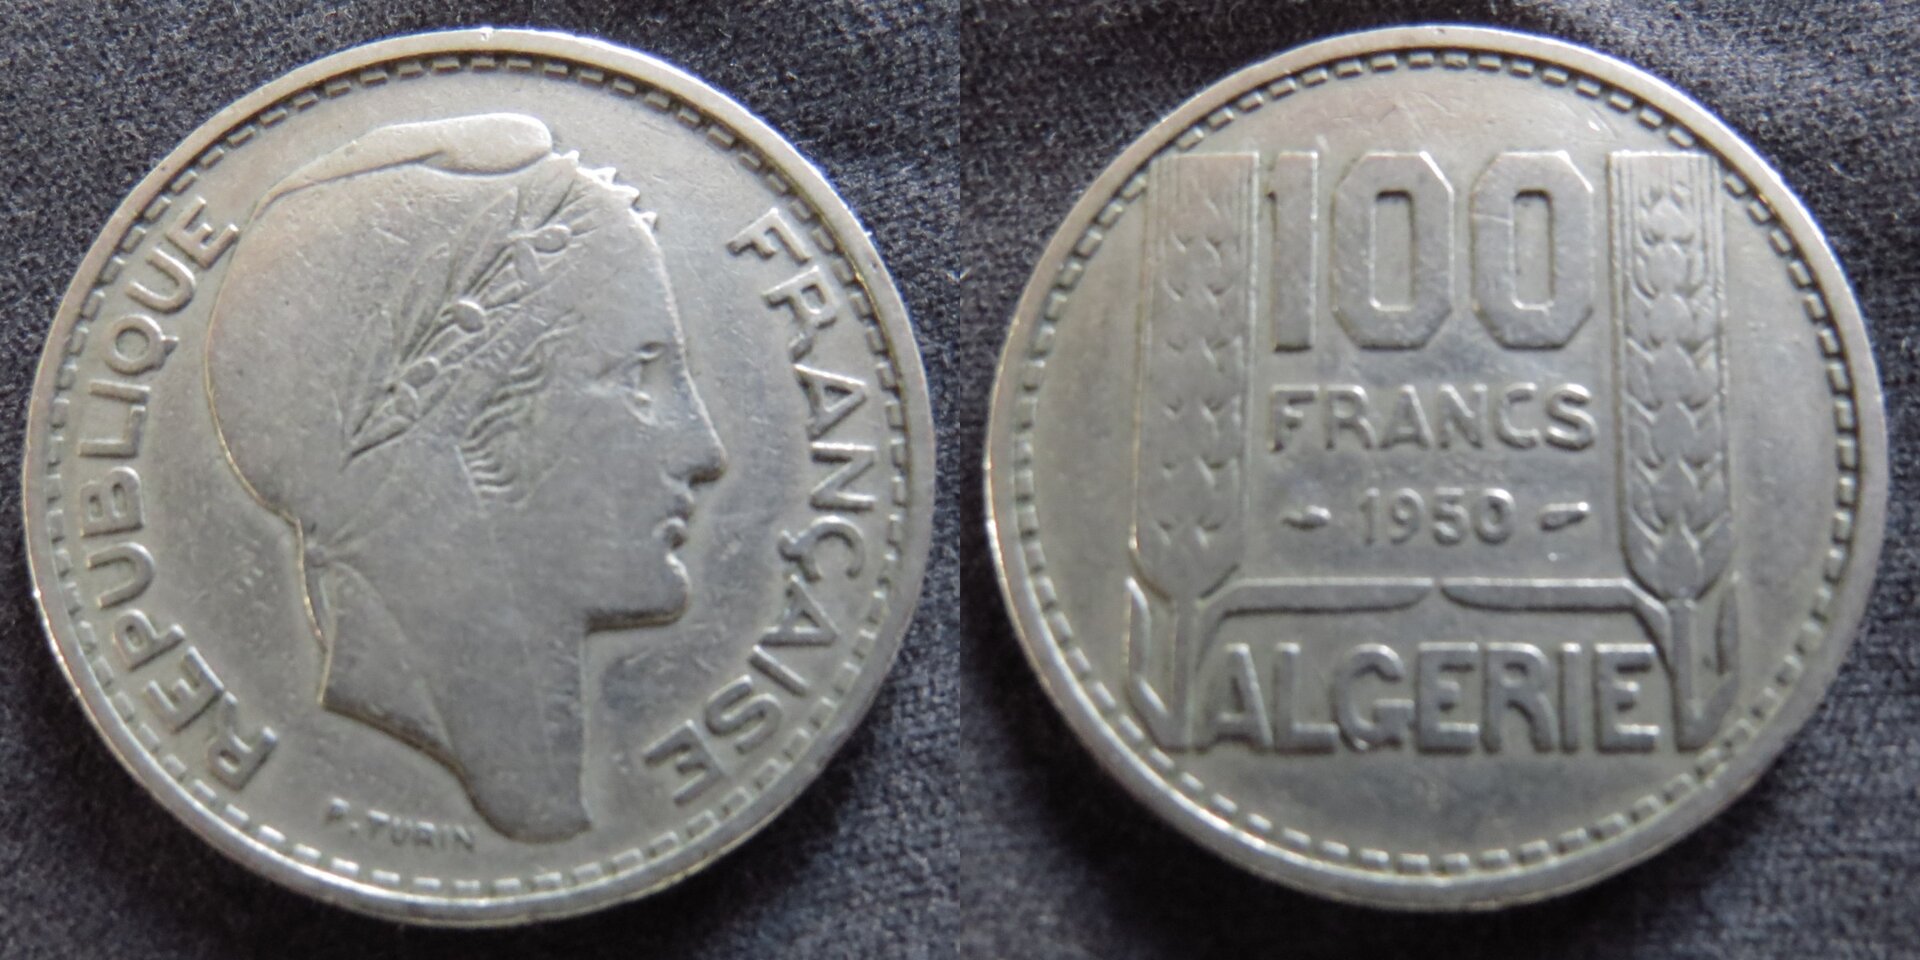 Algeria 100 Francs 1950.jpg